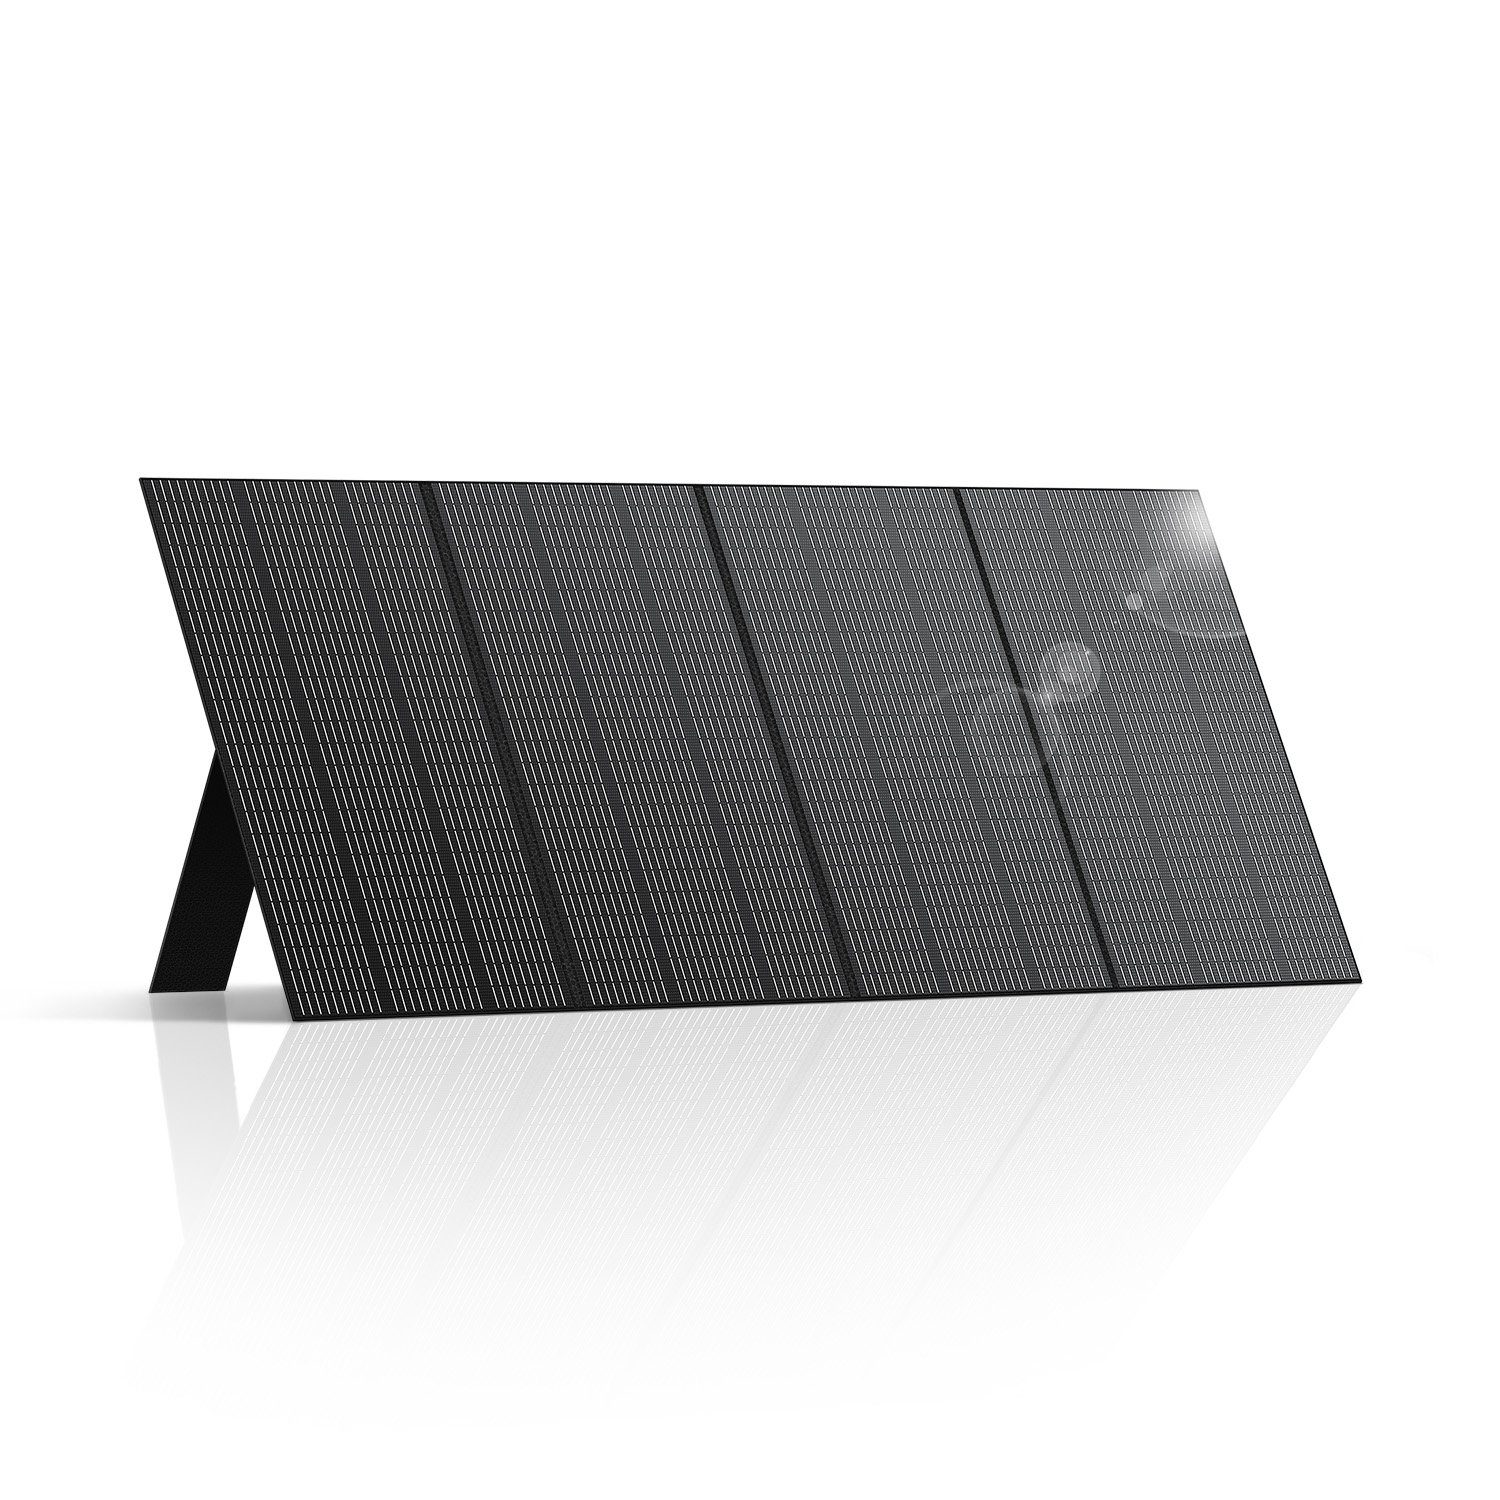 BLUETTI Solaranlage PV350 350W Solarpanel, Schutz Solarmodell für BLUETTI IP65 Stromerzeuger), (1 350W